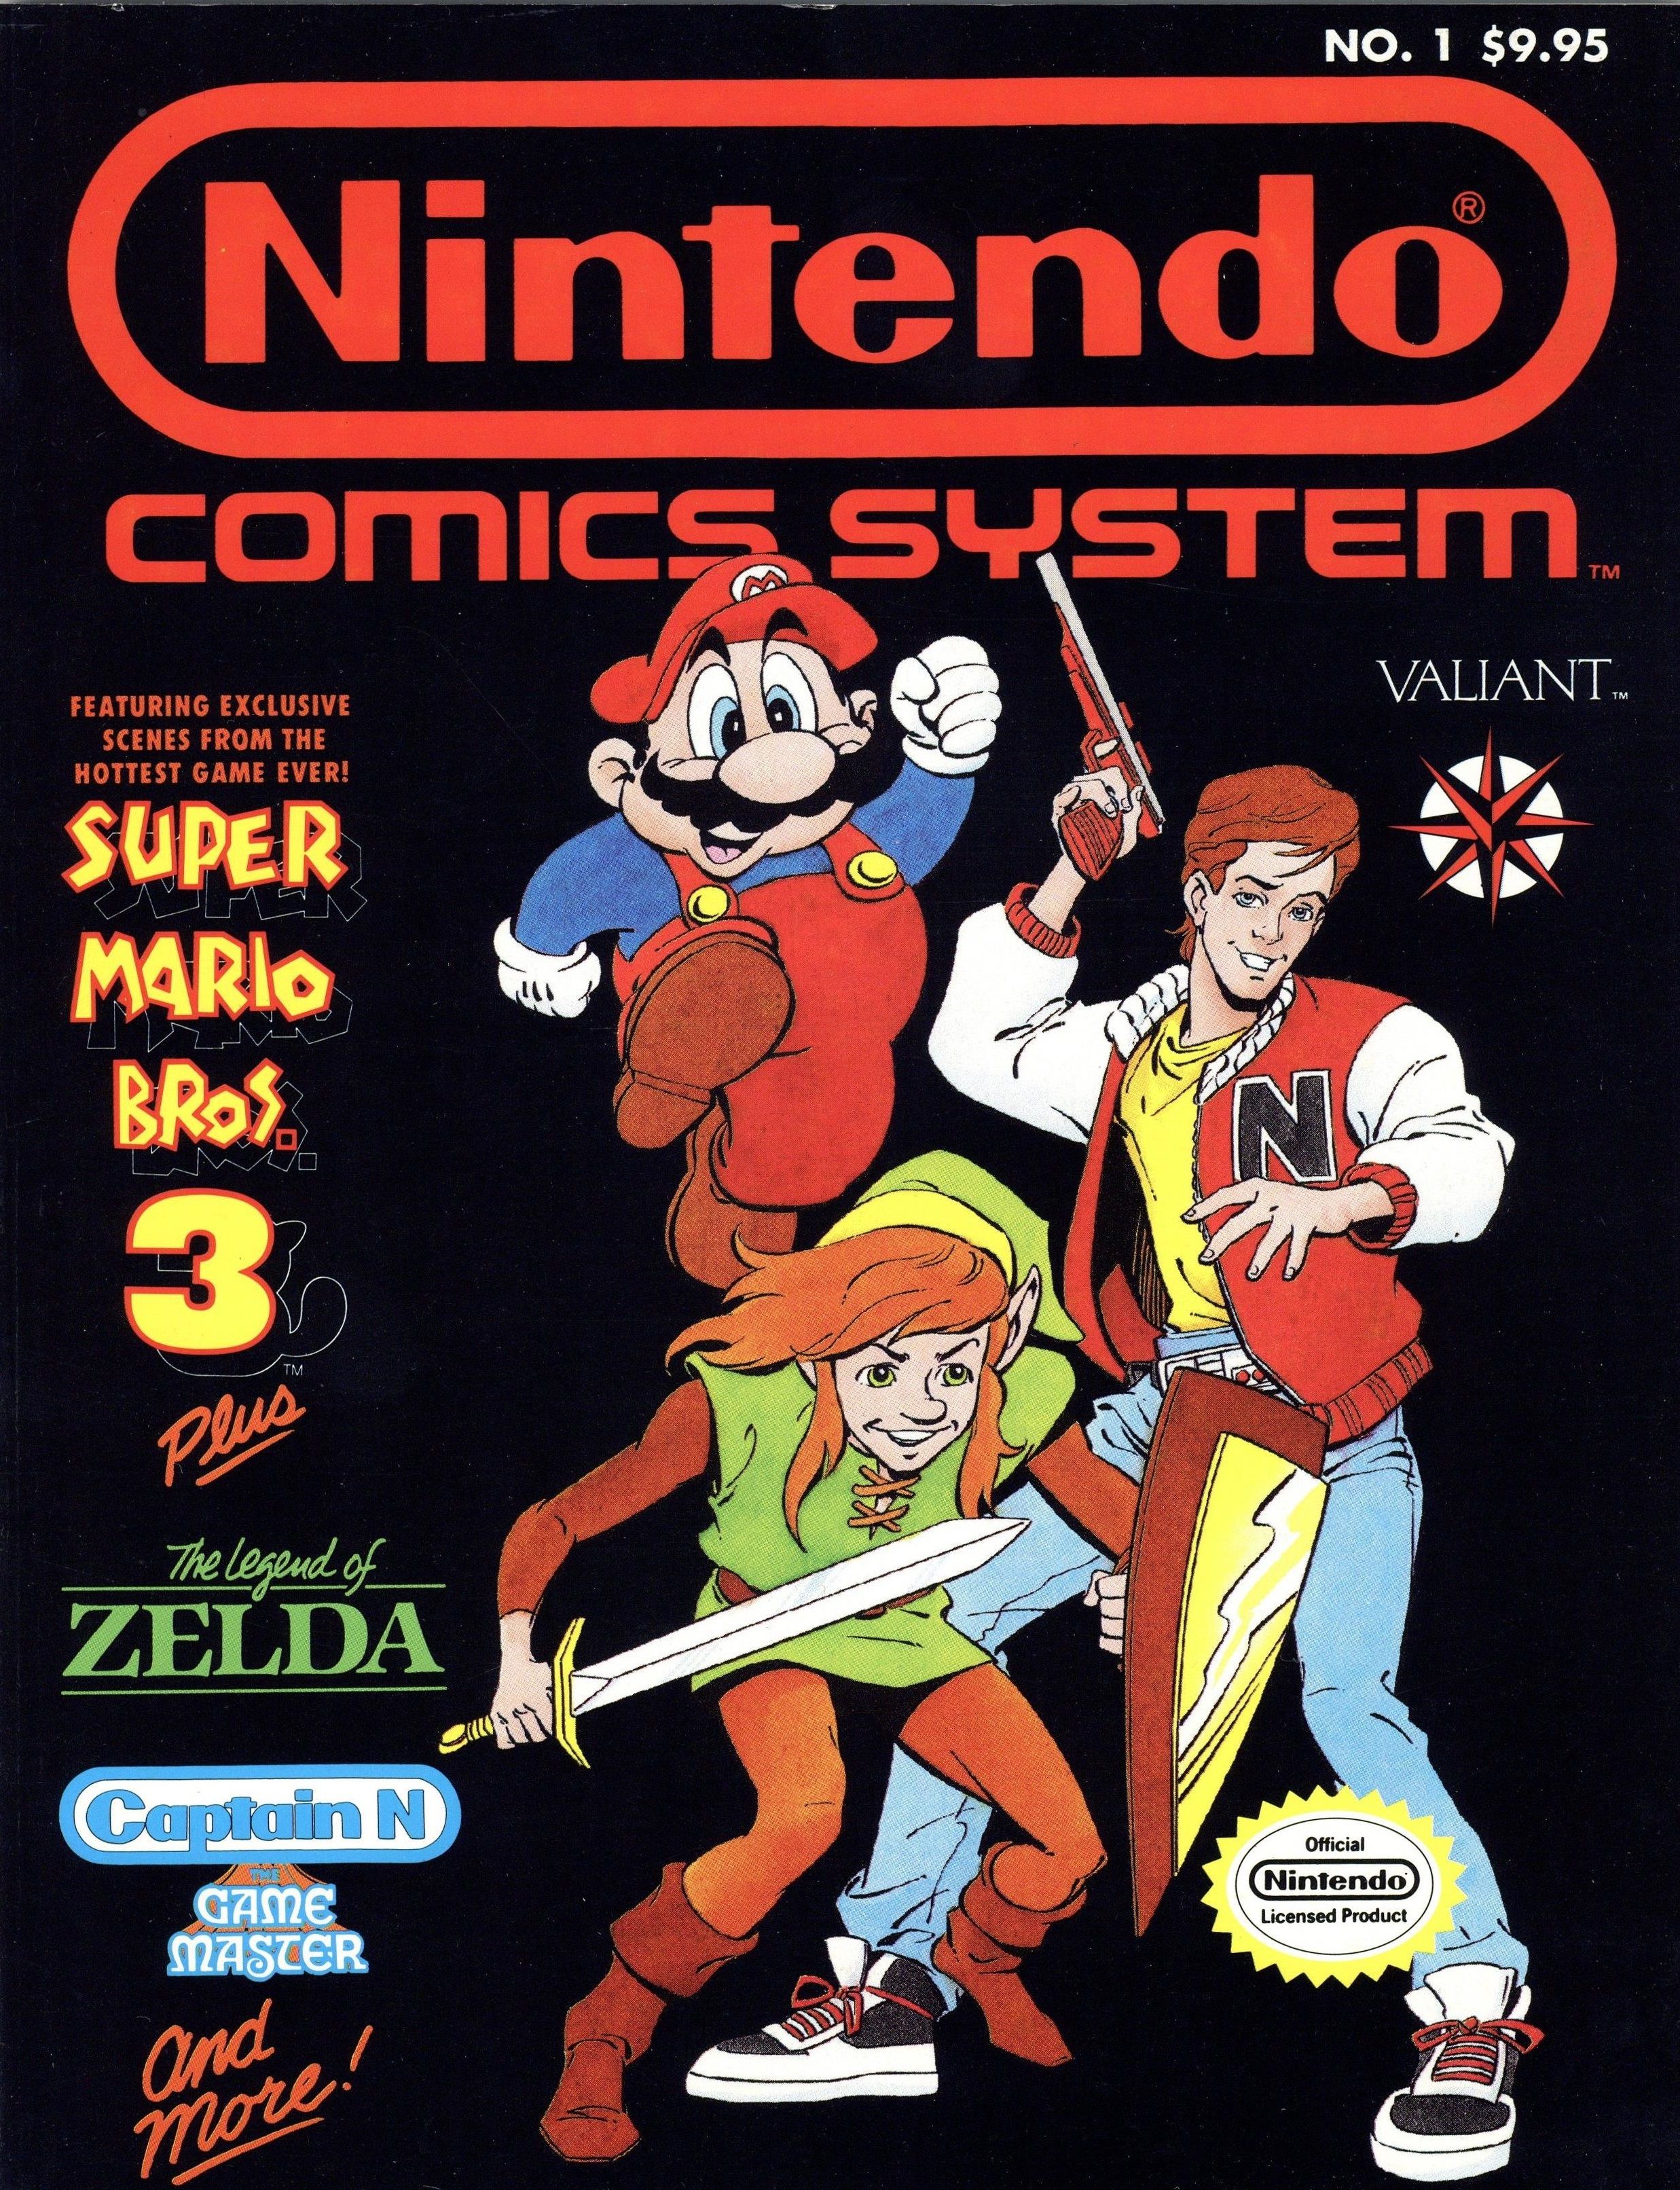 A capa do primeiro gibi da Nintendo da Valiant